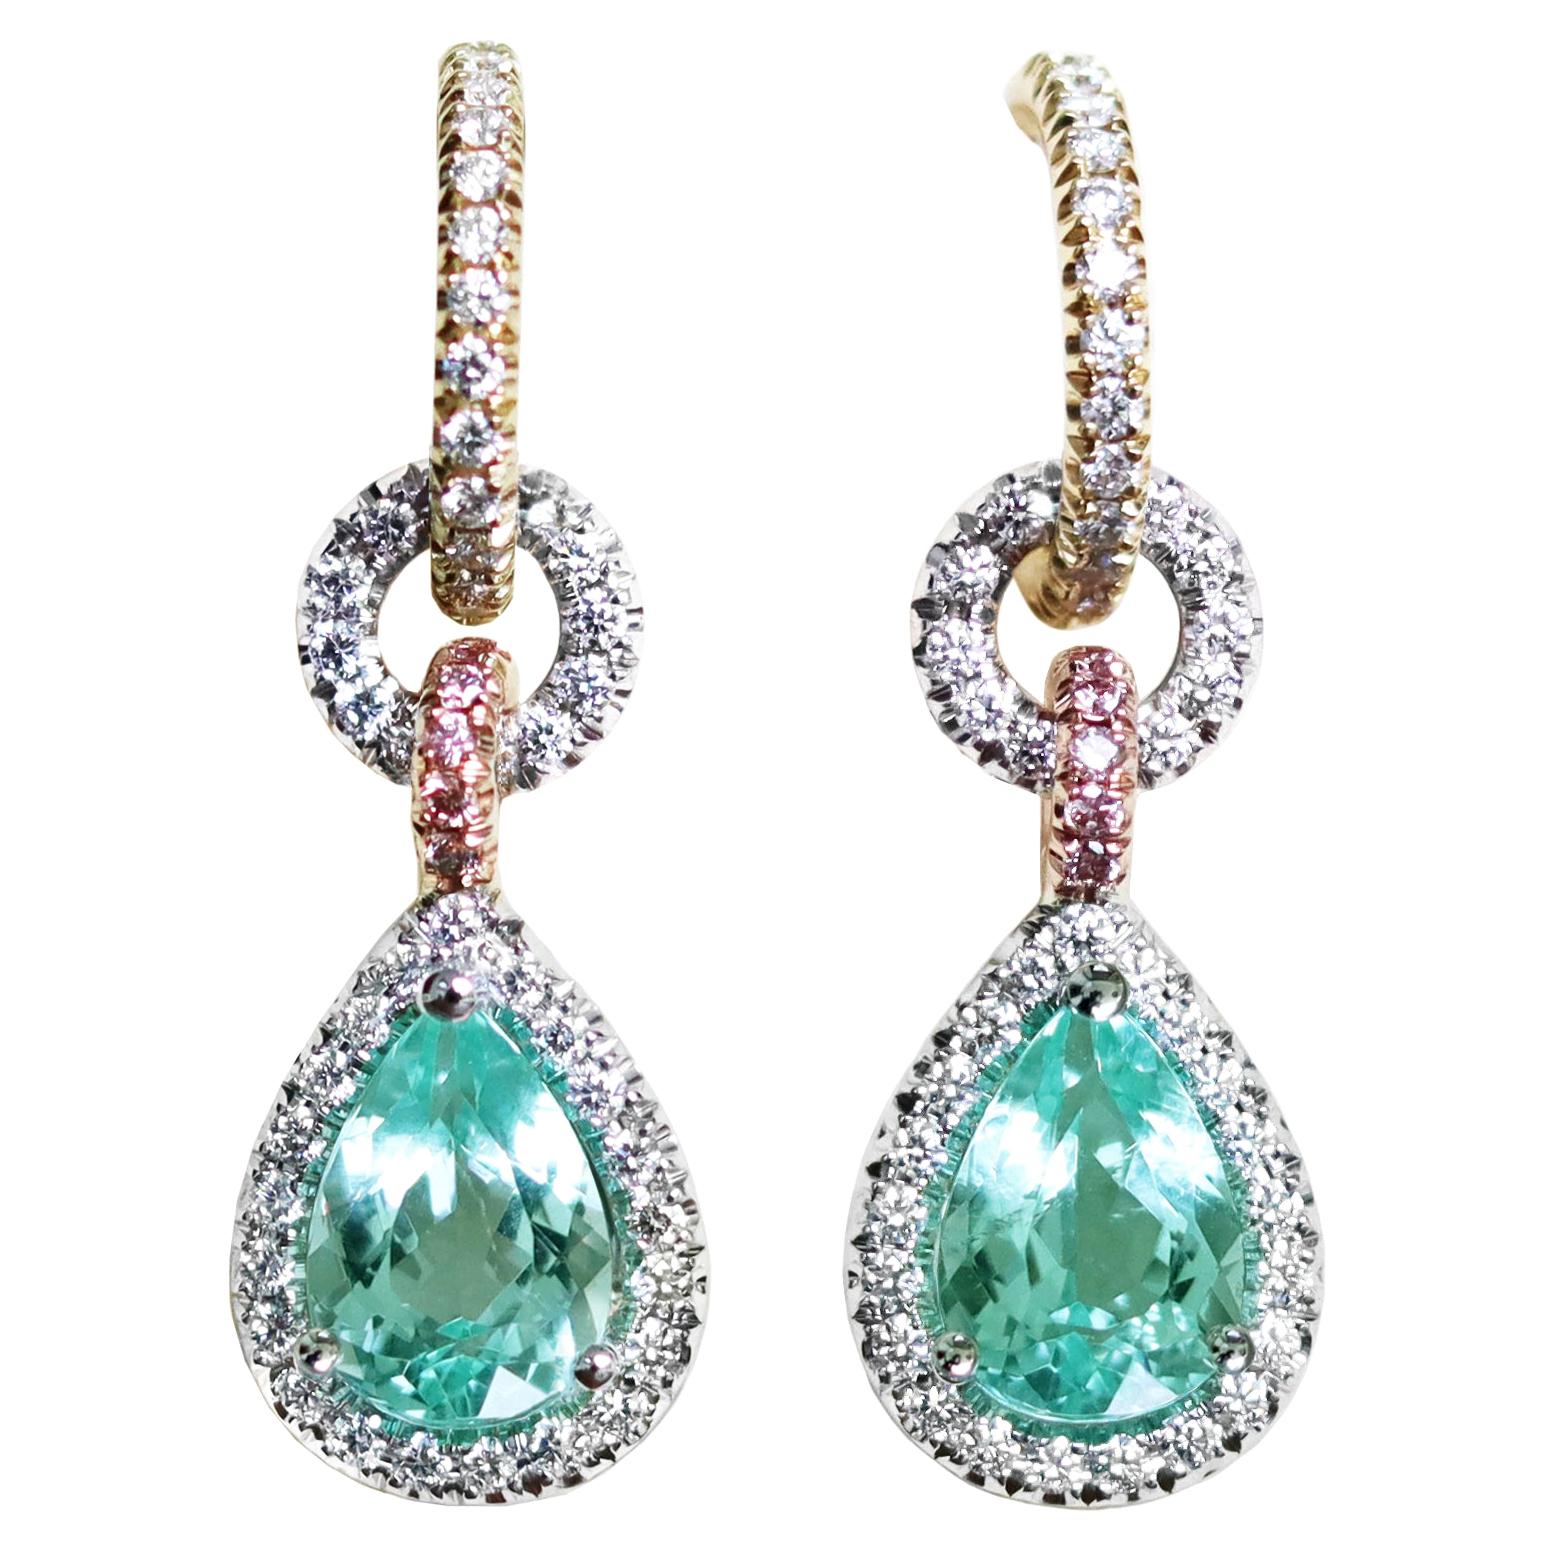 2.69 Carat Paraiba Tourmaline White & Pink Diamond Halo Charm Earrings